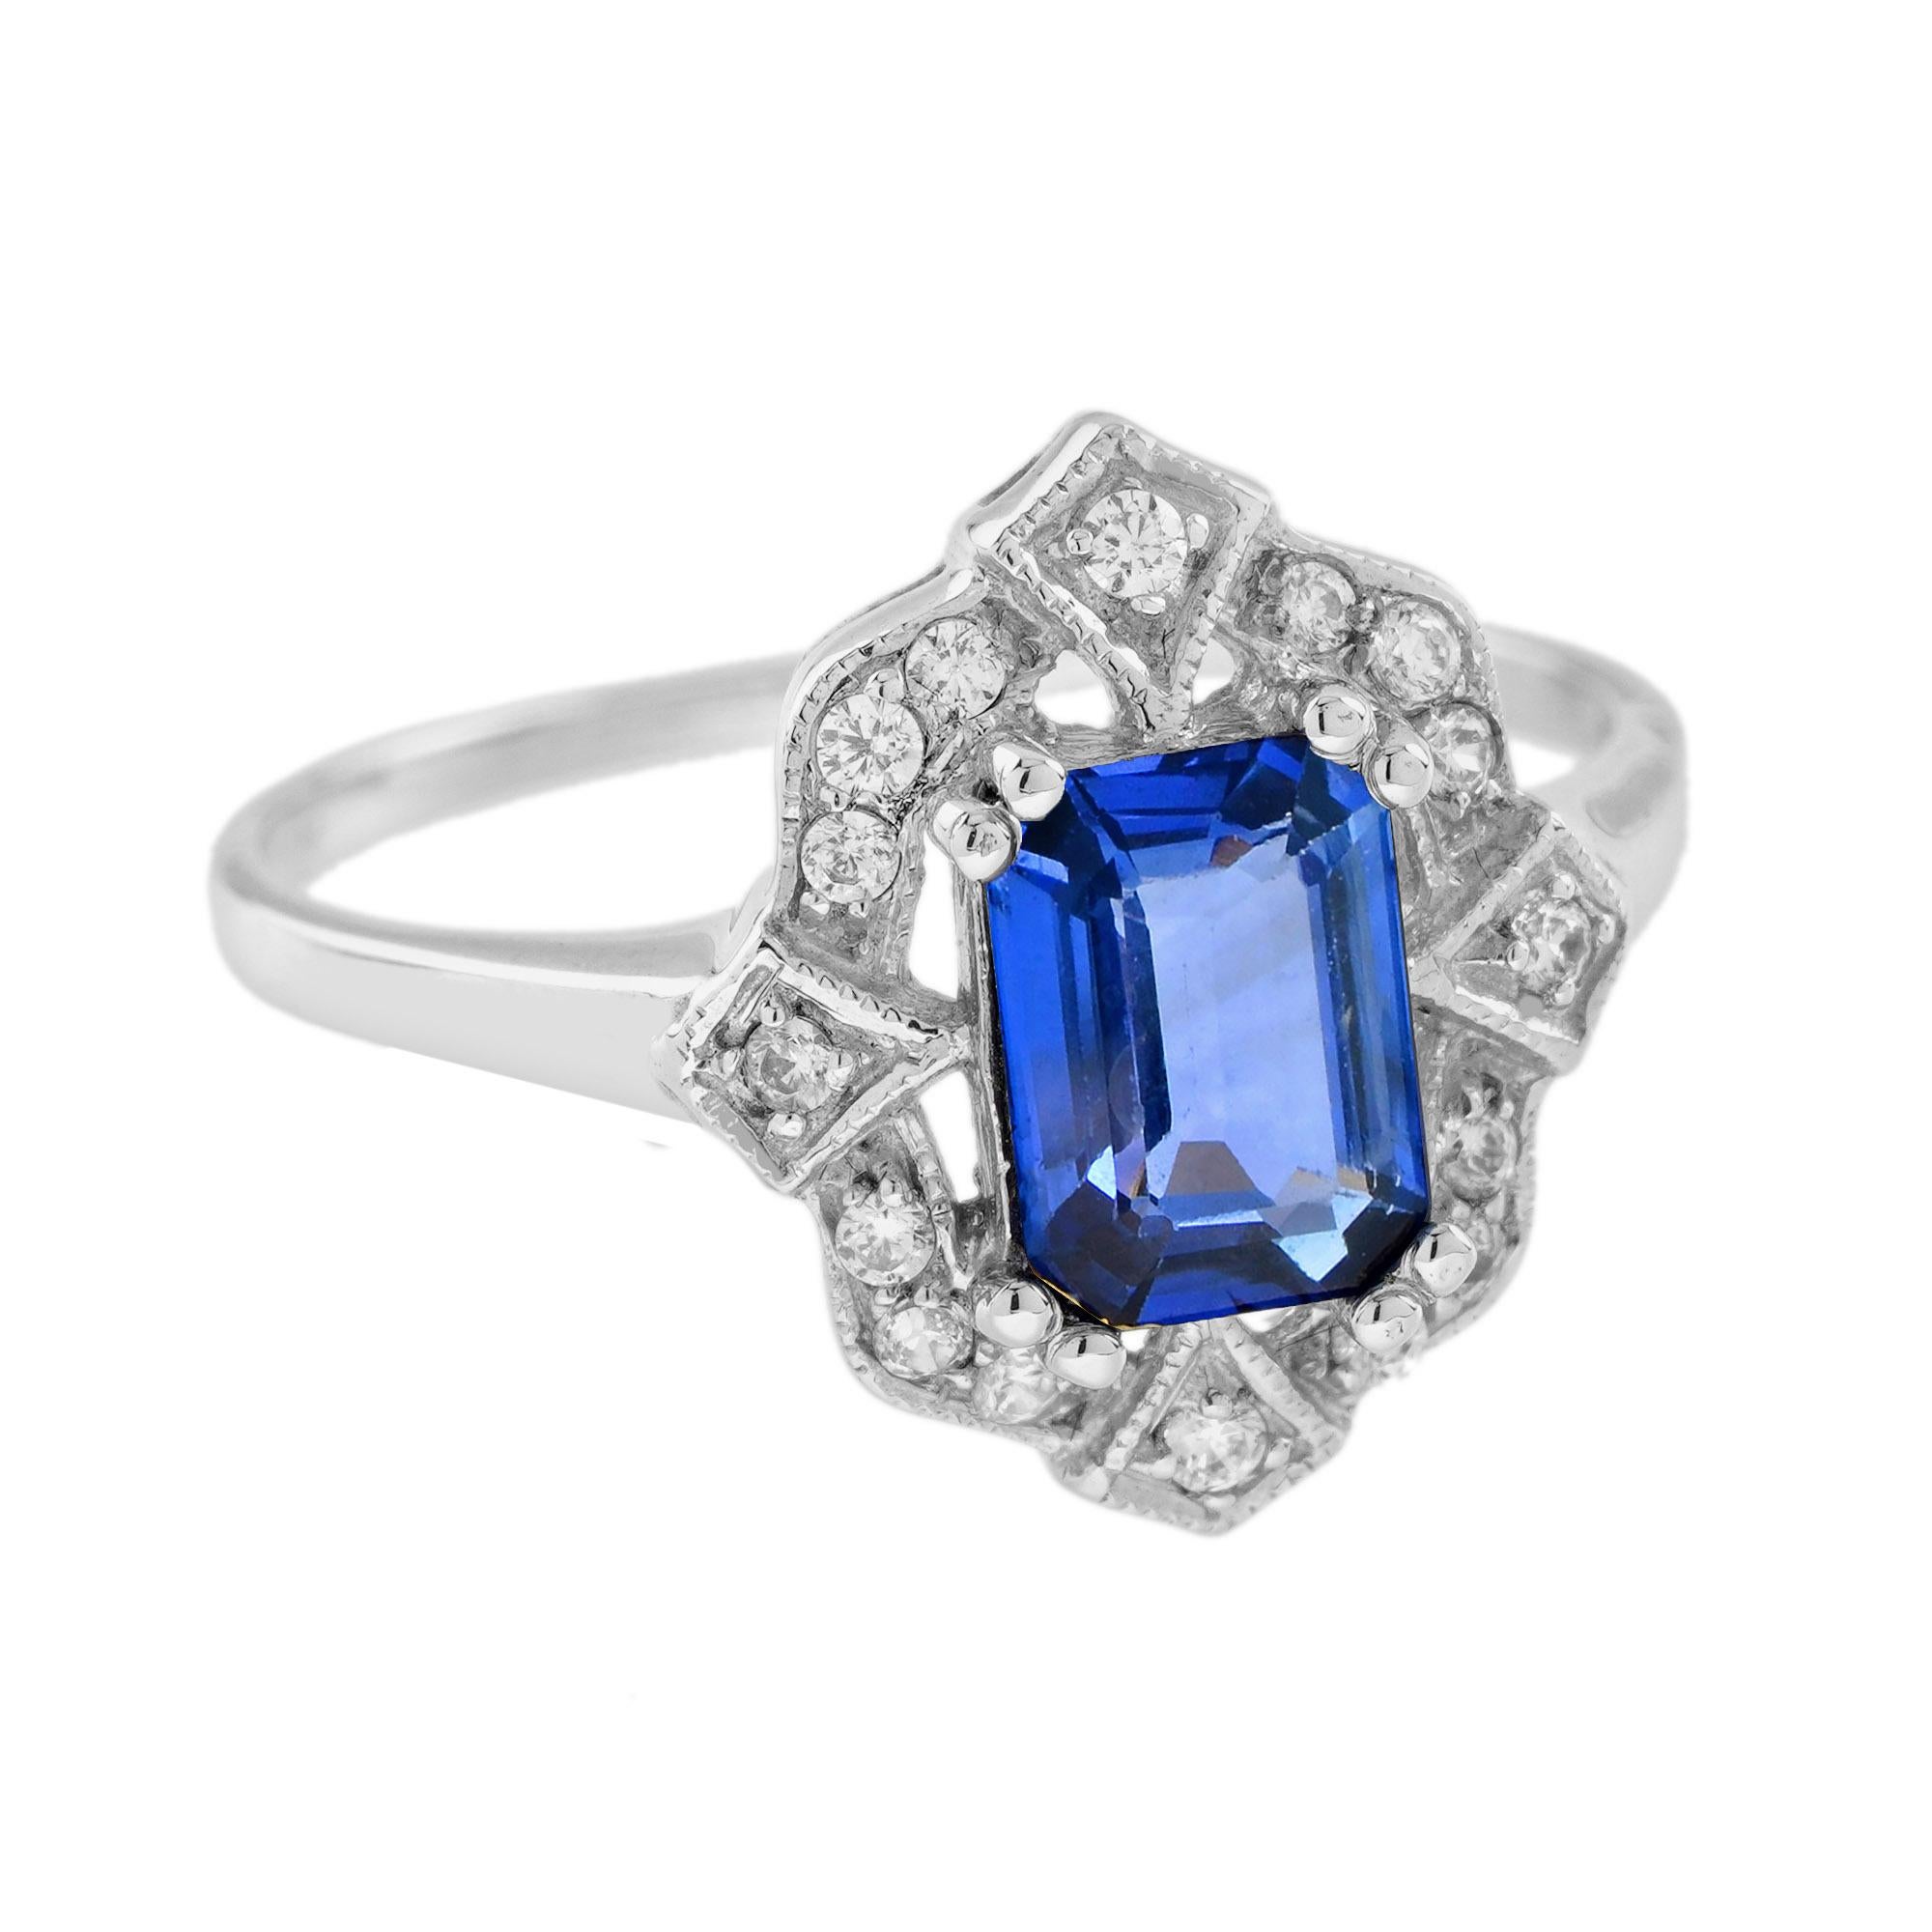 For Sale:  Emerald Cut Ceylon Sapphire and Diamond Halo Ring in 18K White Gold 3